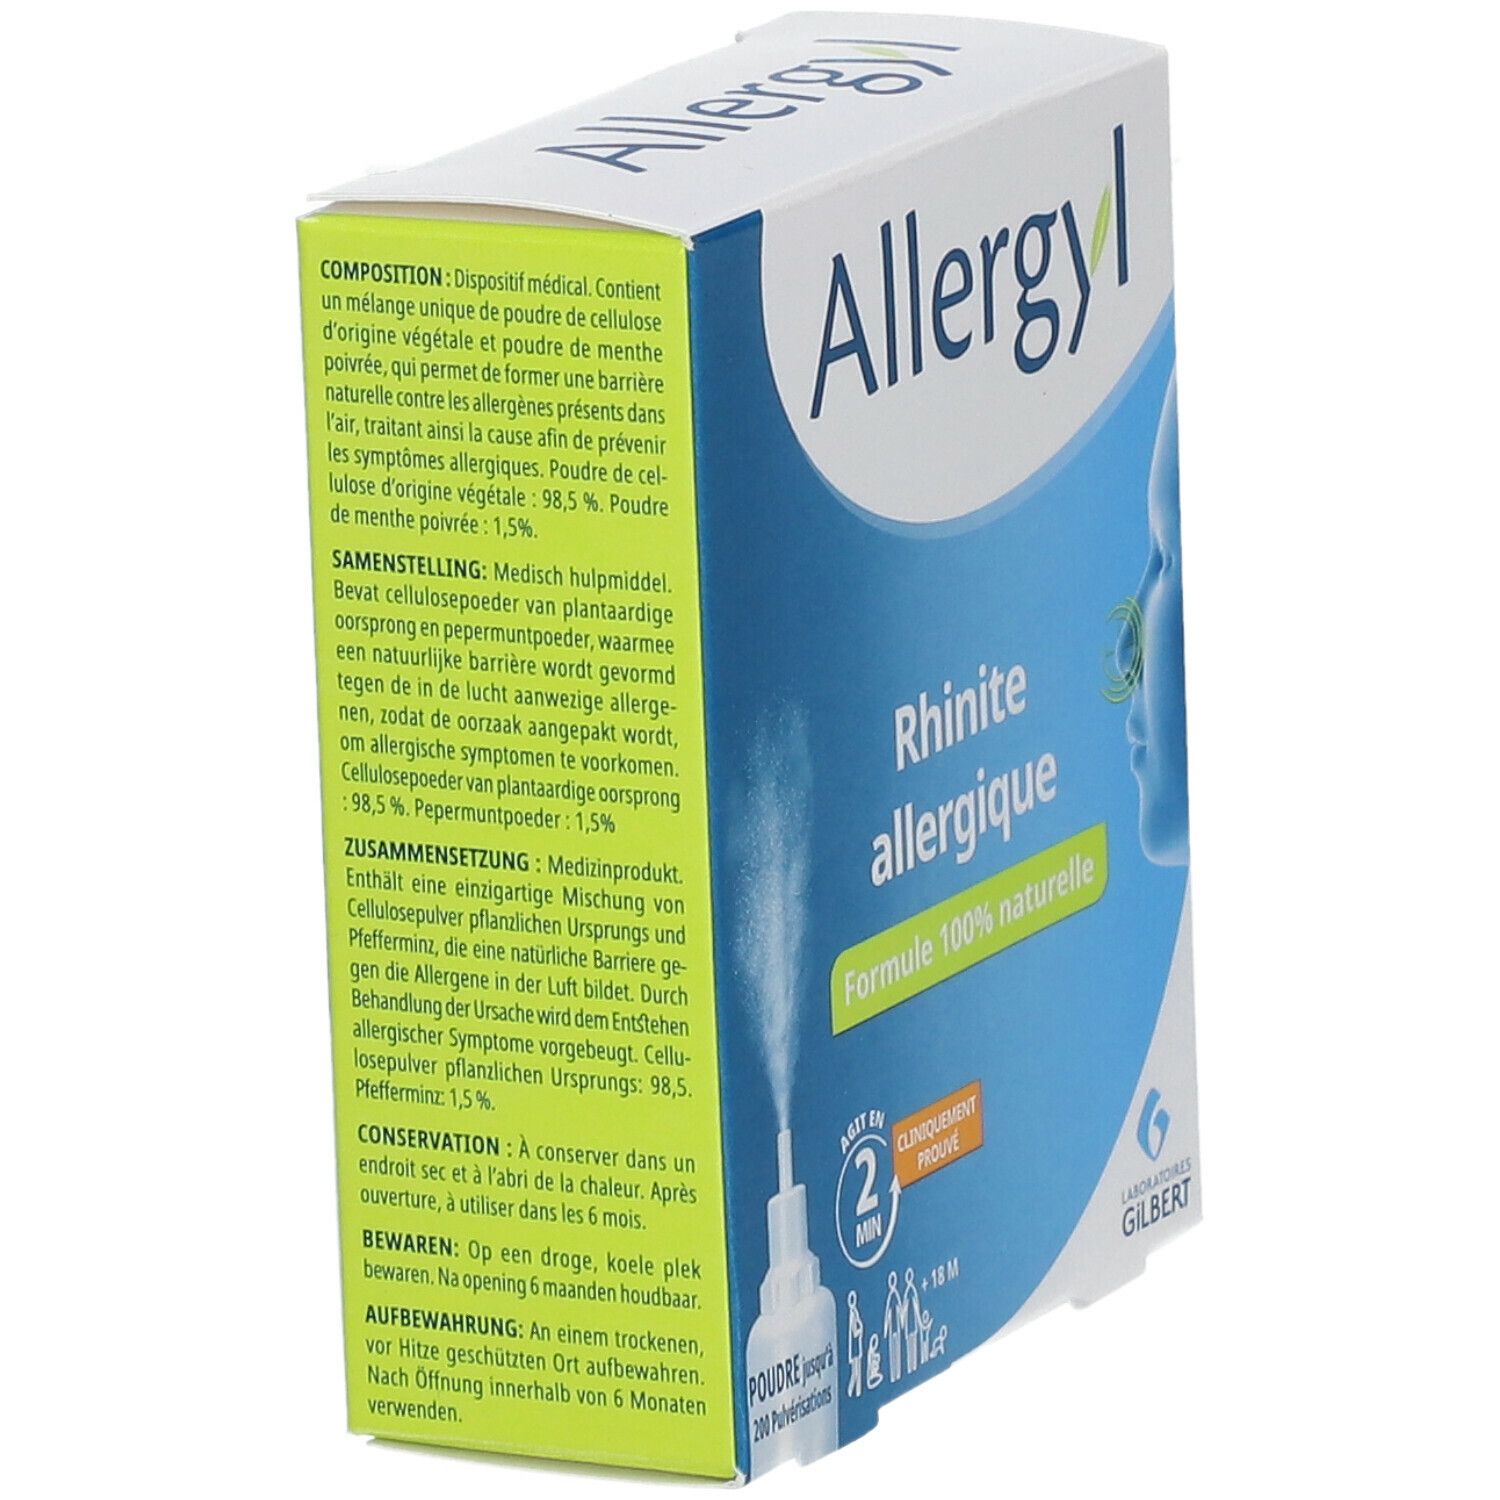 Allergyl Rhinite Allergique Spray Protection